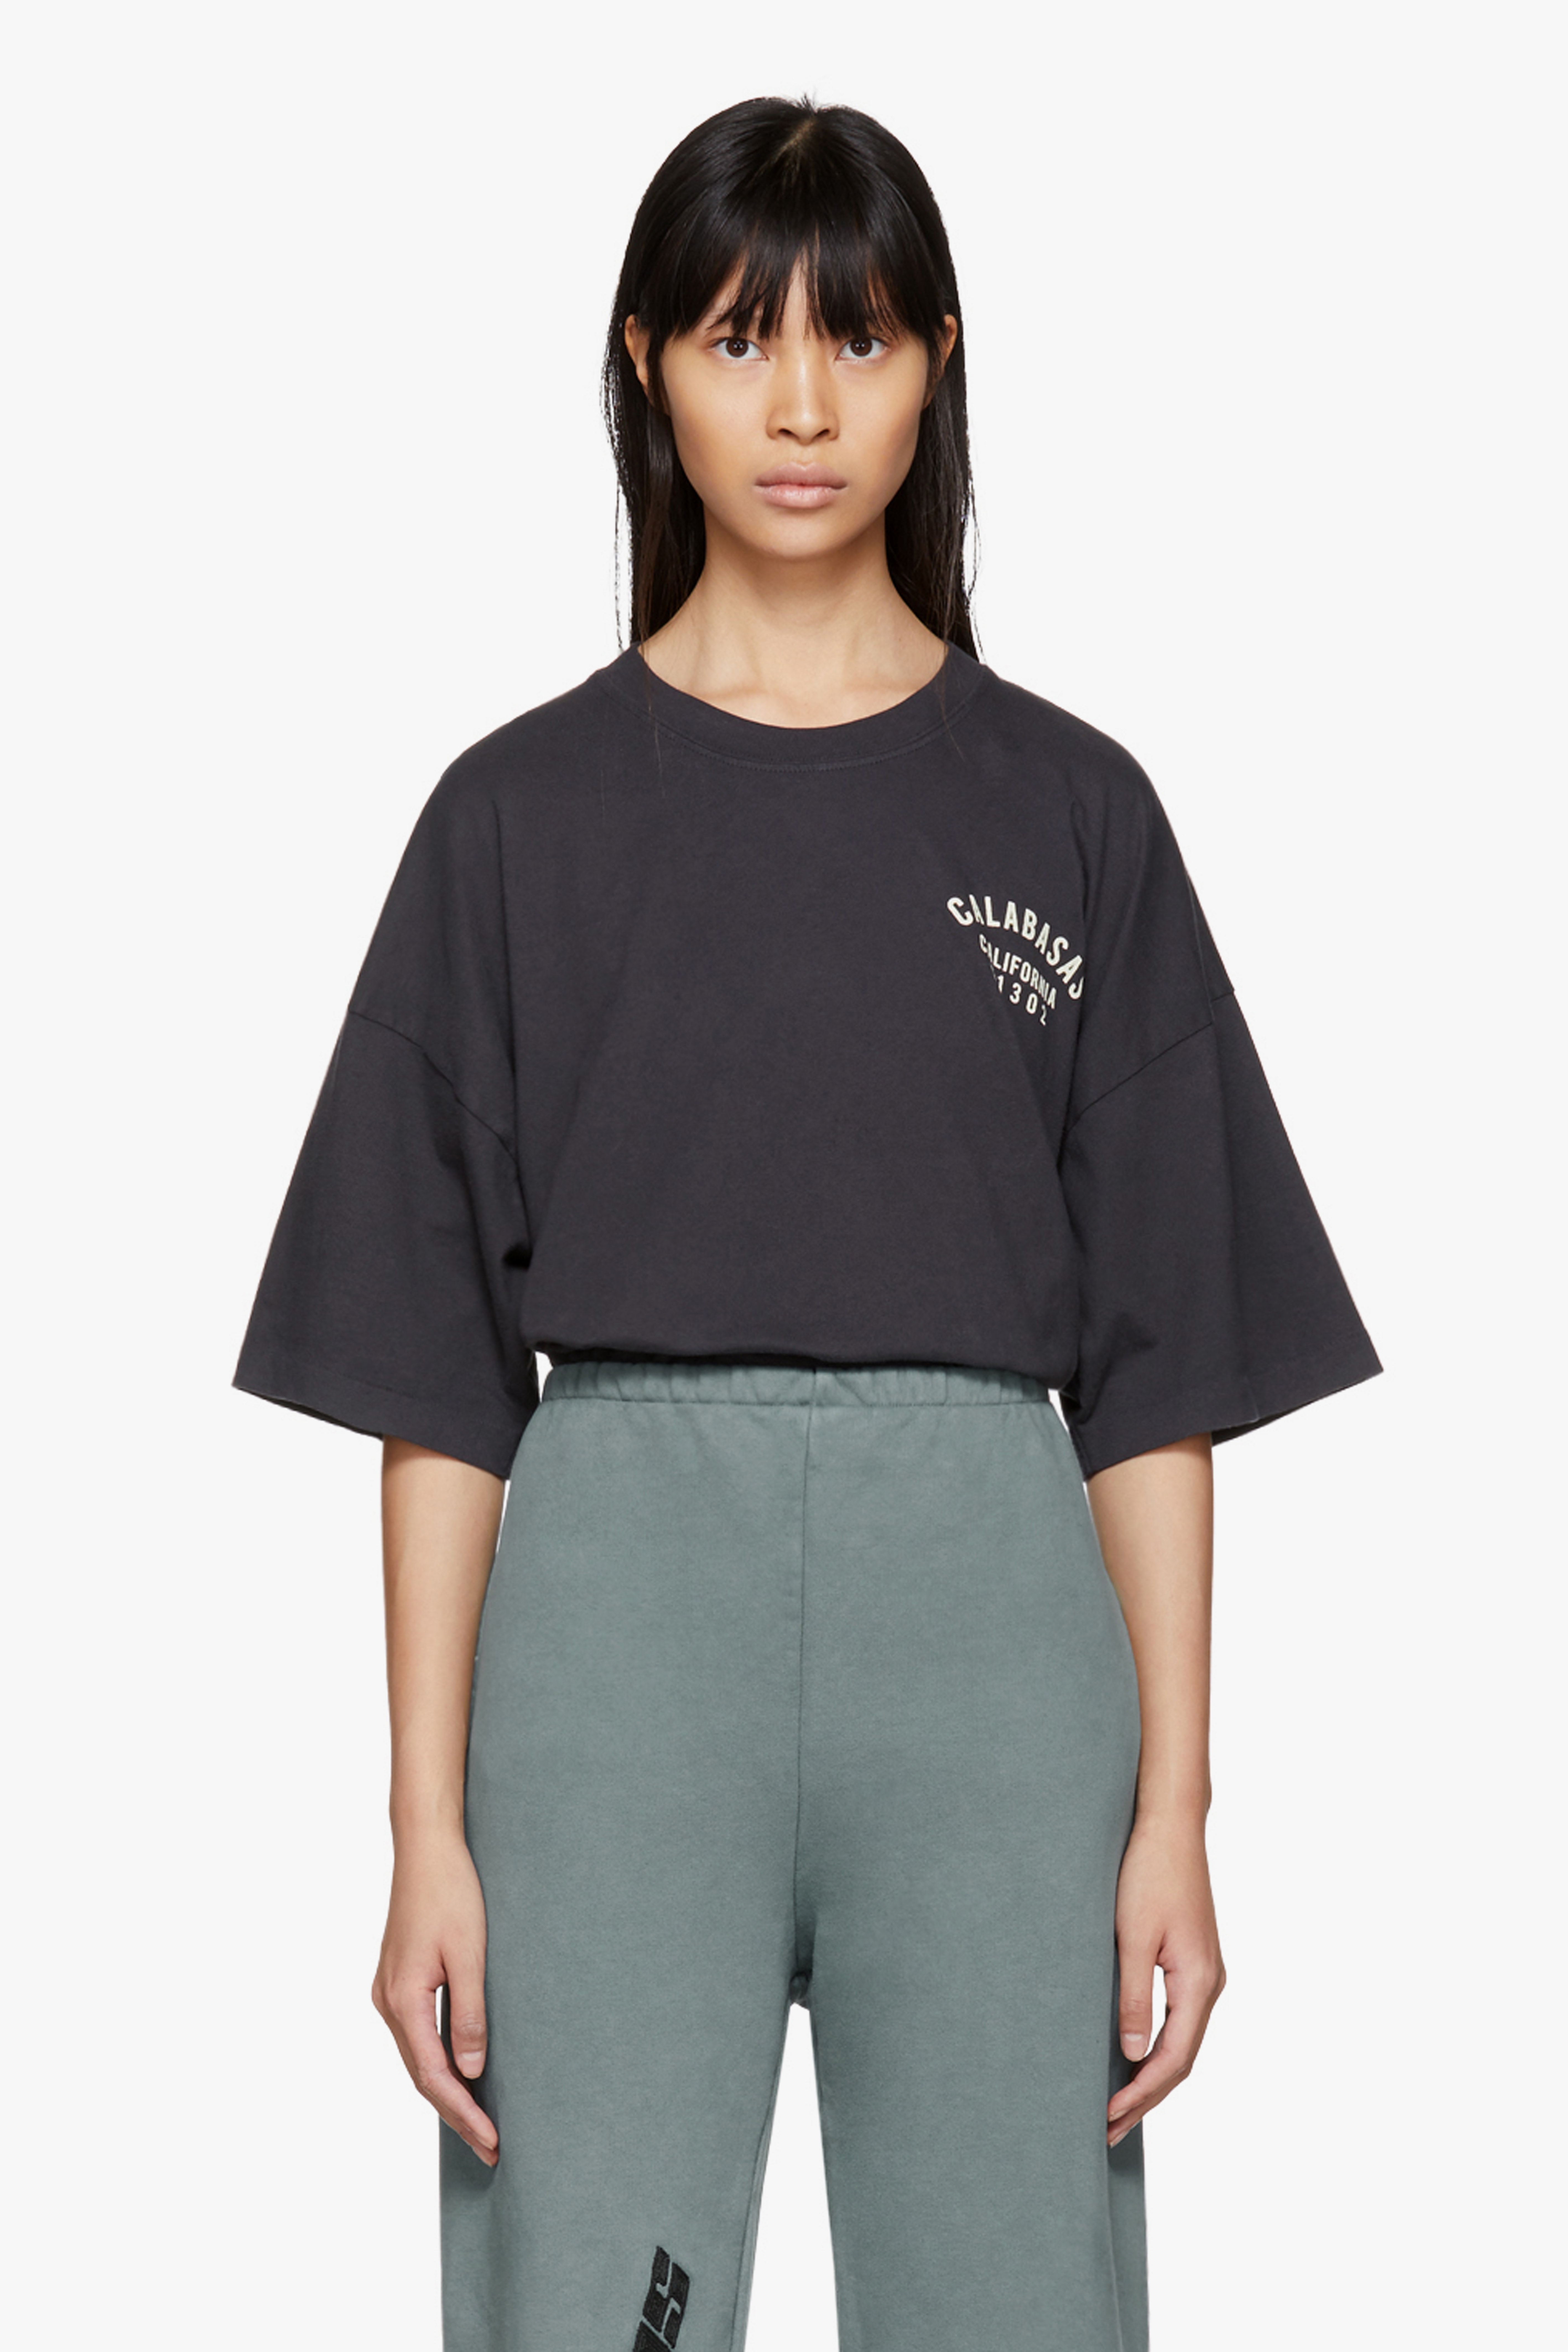 YEEZY Season Kanye West Collection SSENSE New T-Shirt Sweater Jacket adidas Originals Fashion